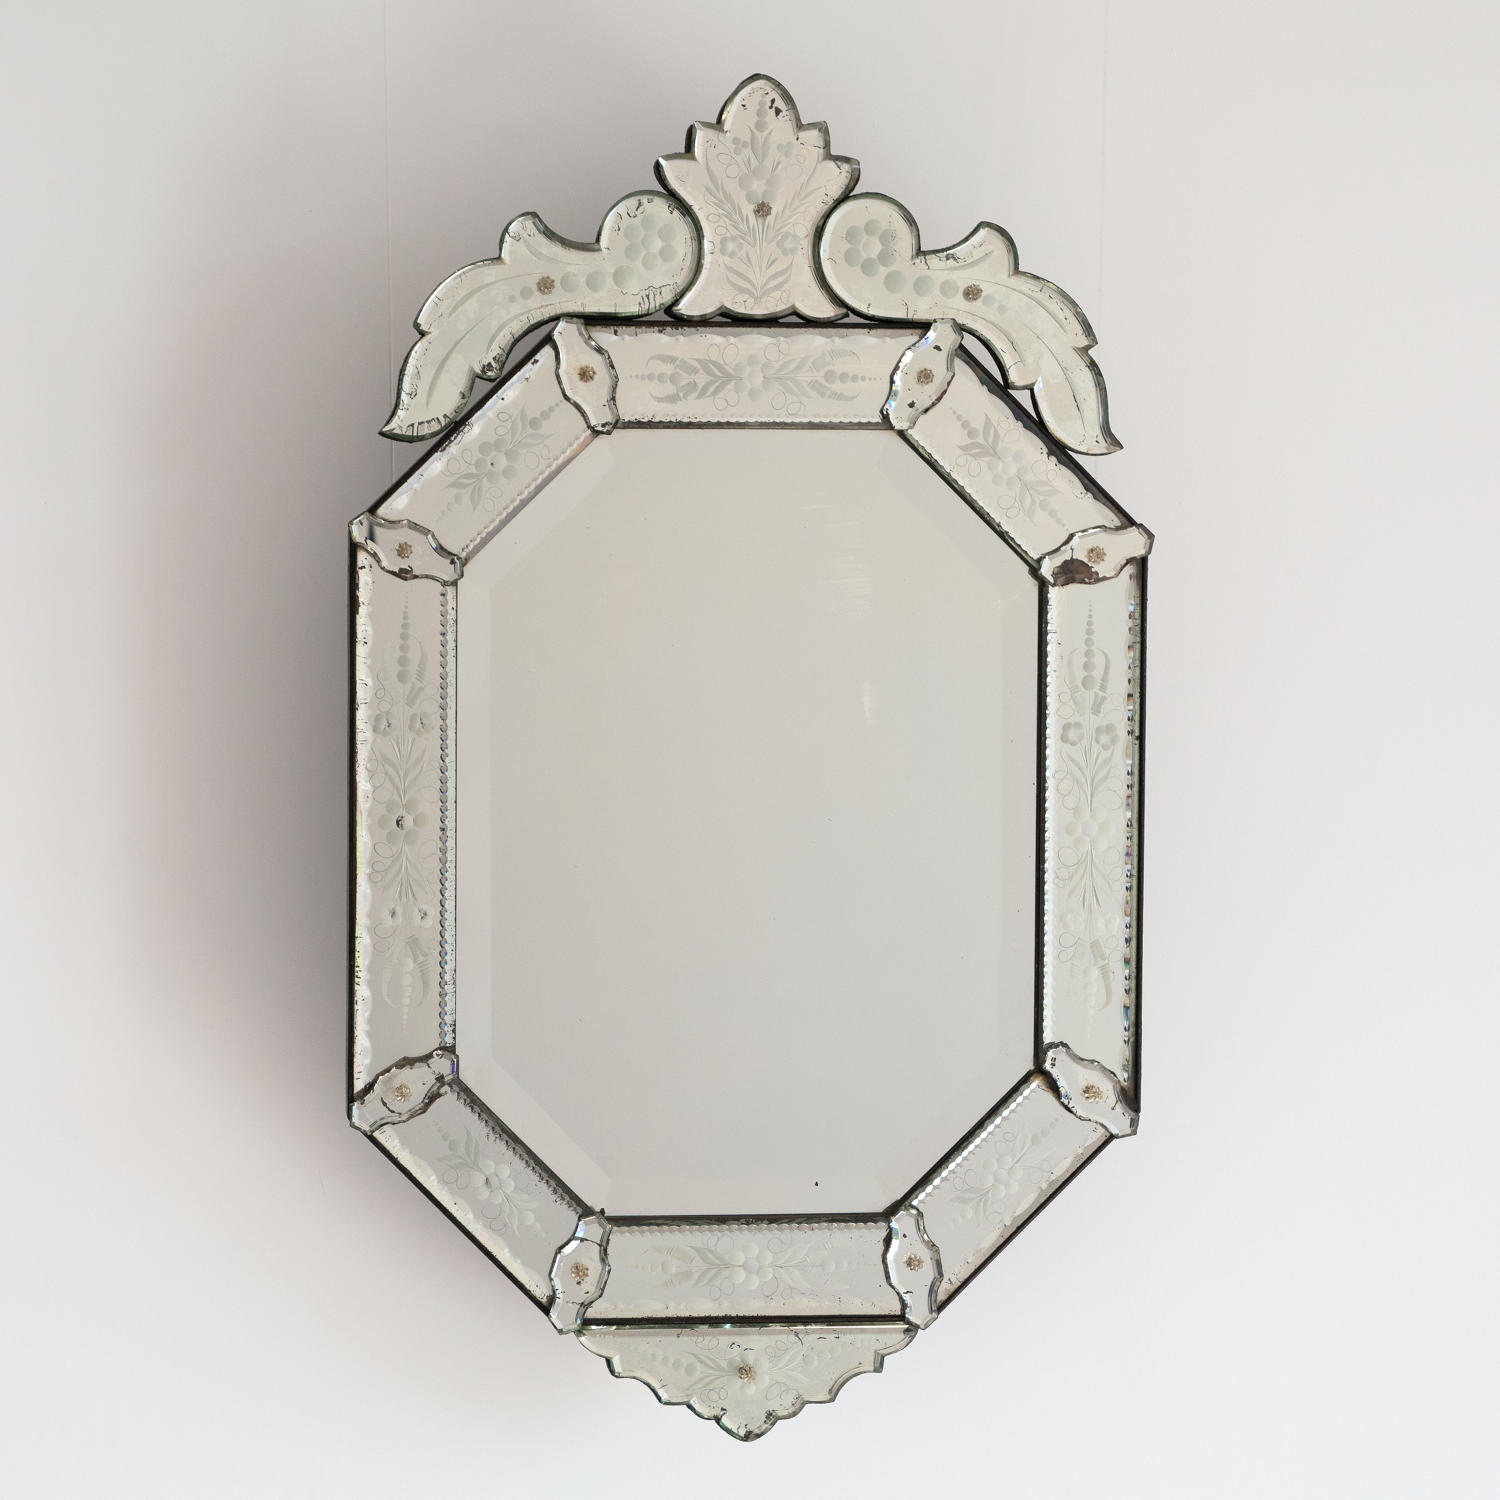 Octagonal Antique Venetian Mirror: A Timeless Reflection Of Beauty